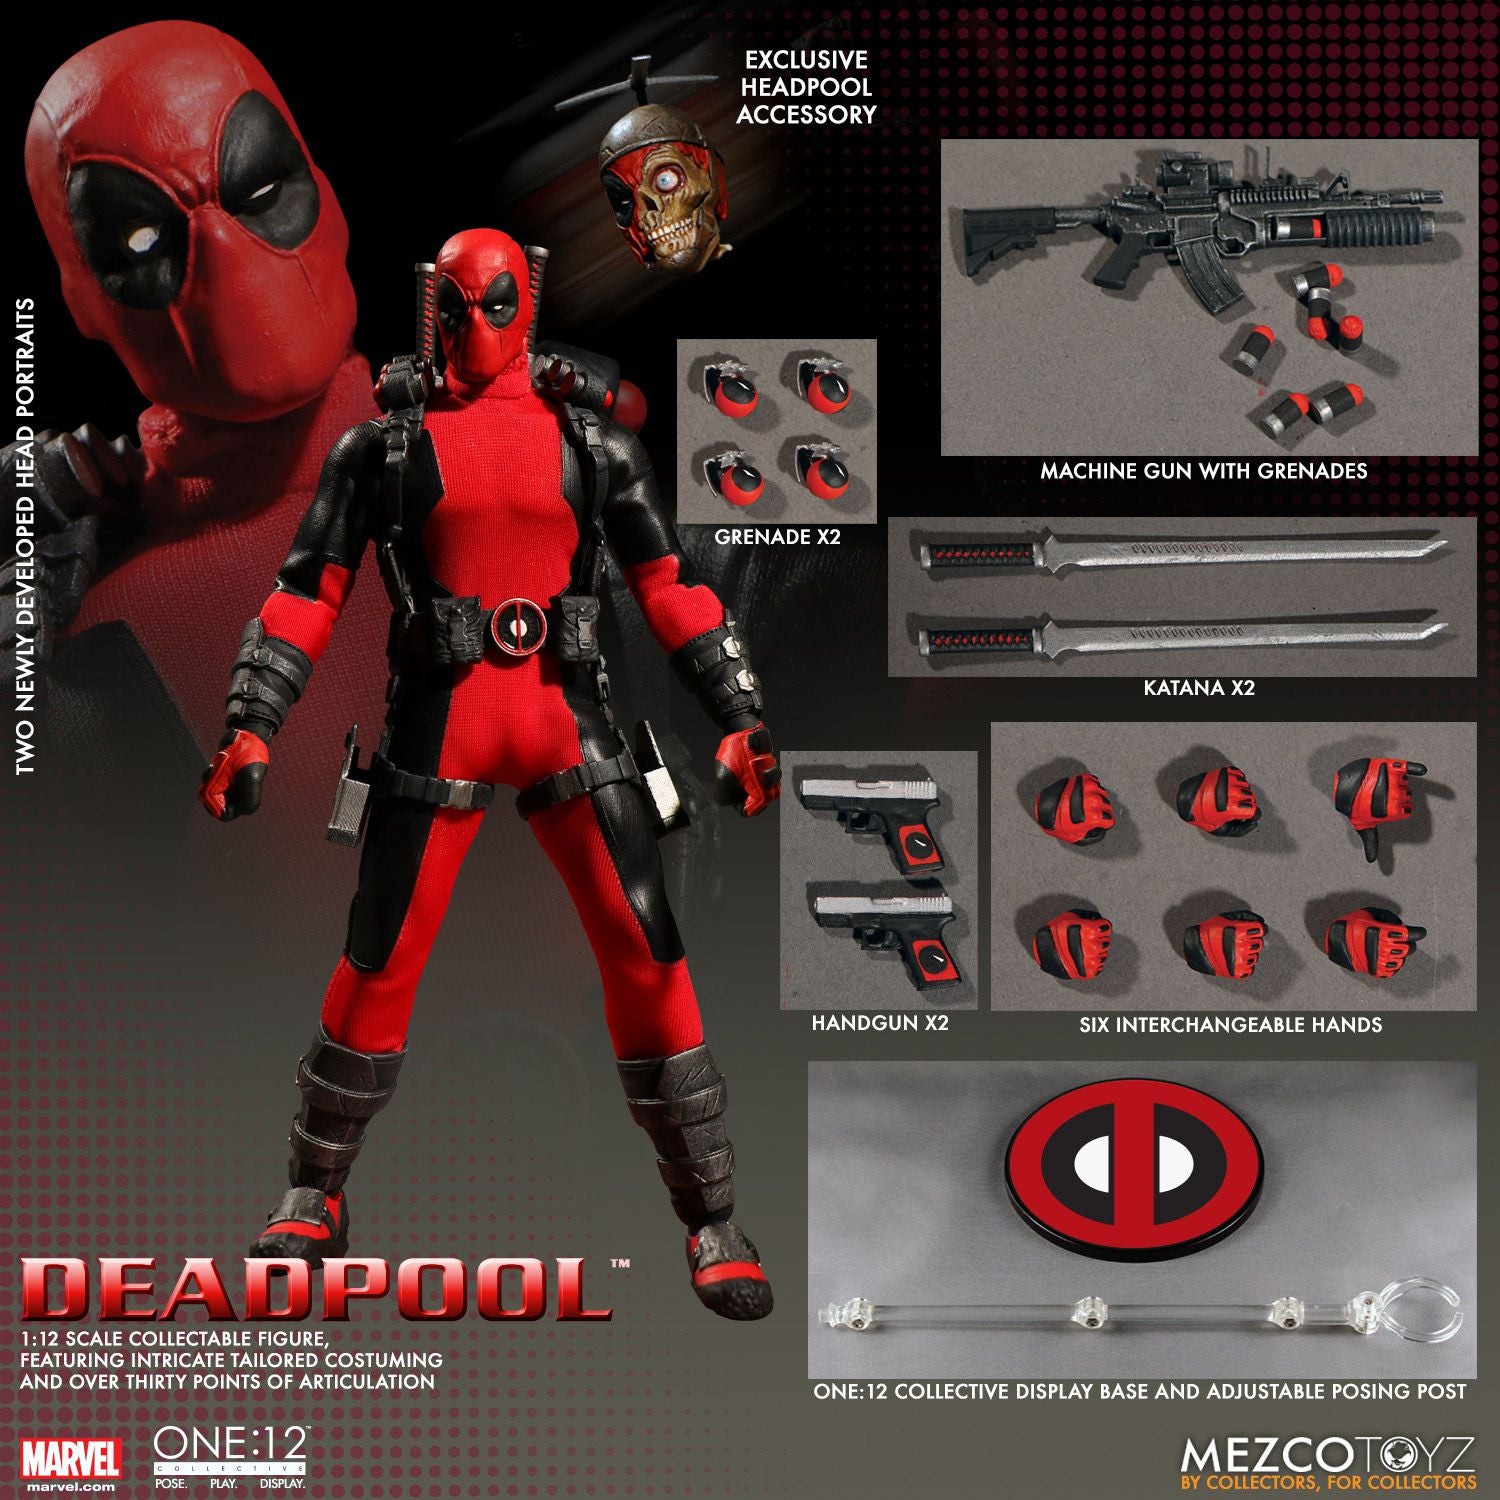 One:12 Collective Deadpool Mezco Exclusive action figure